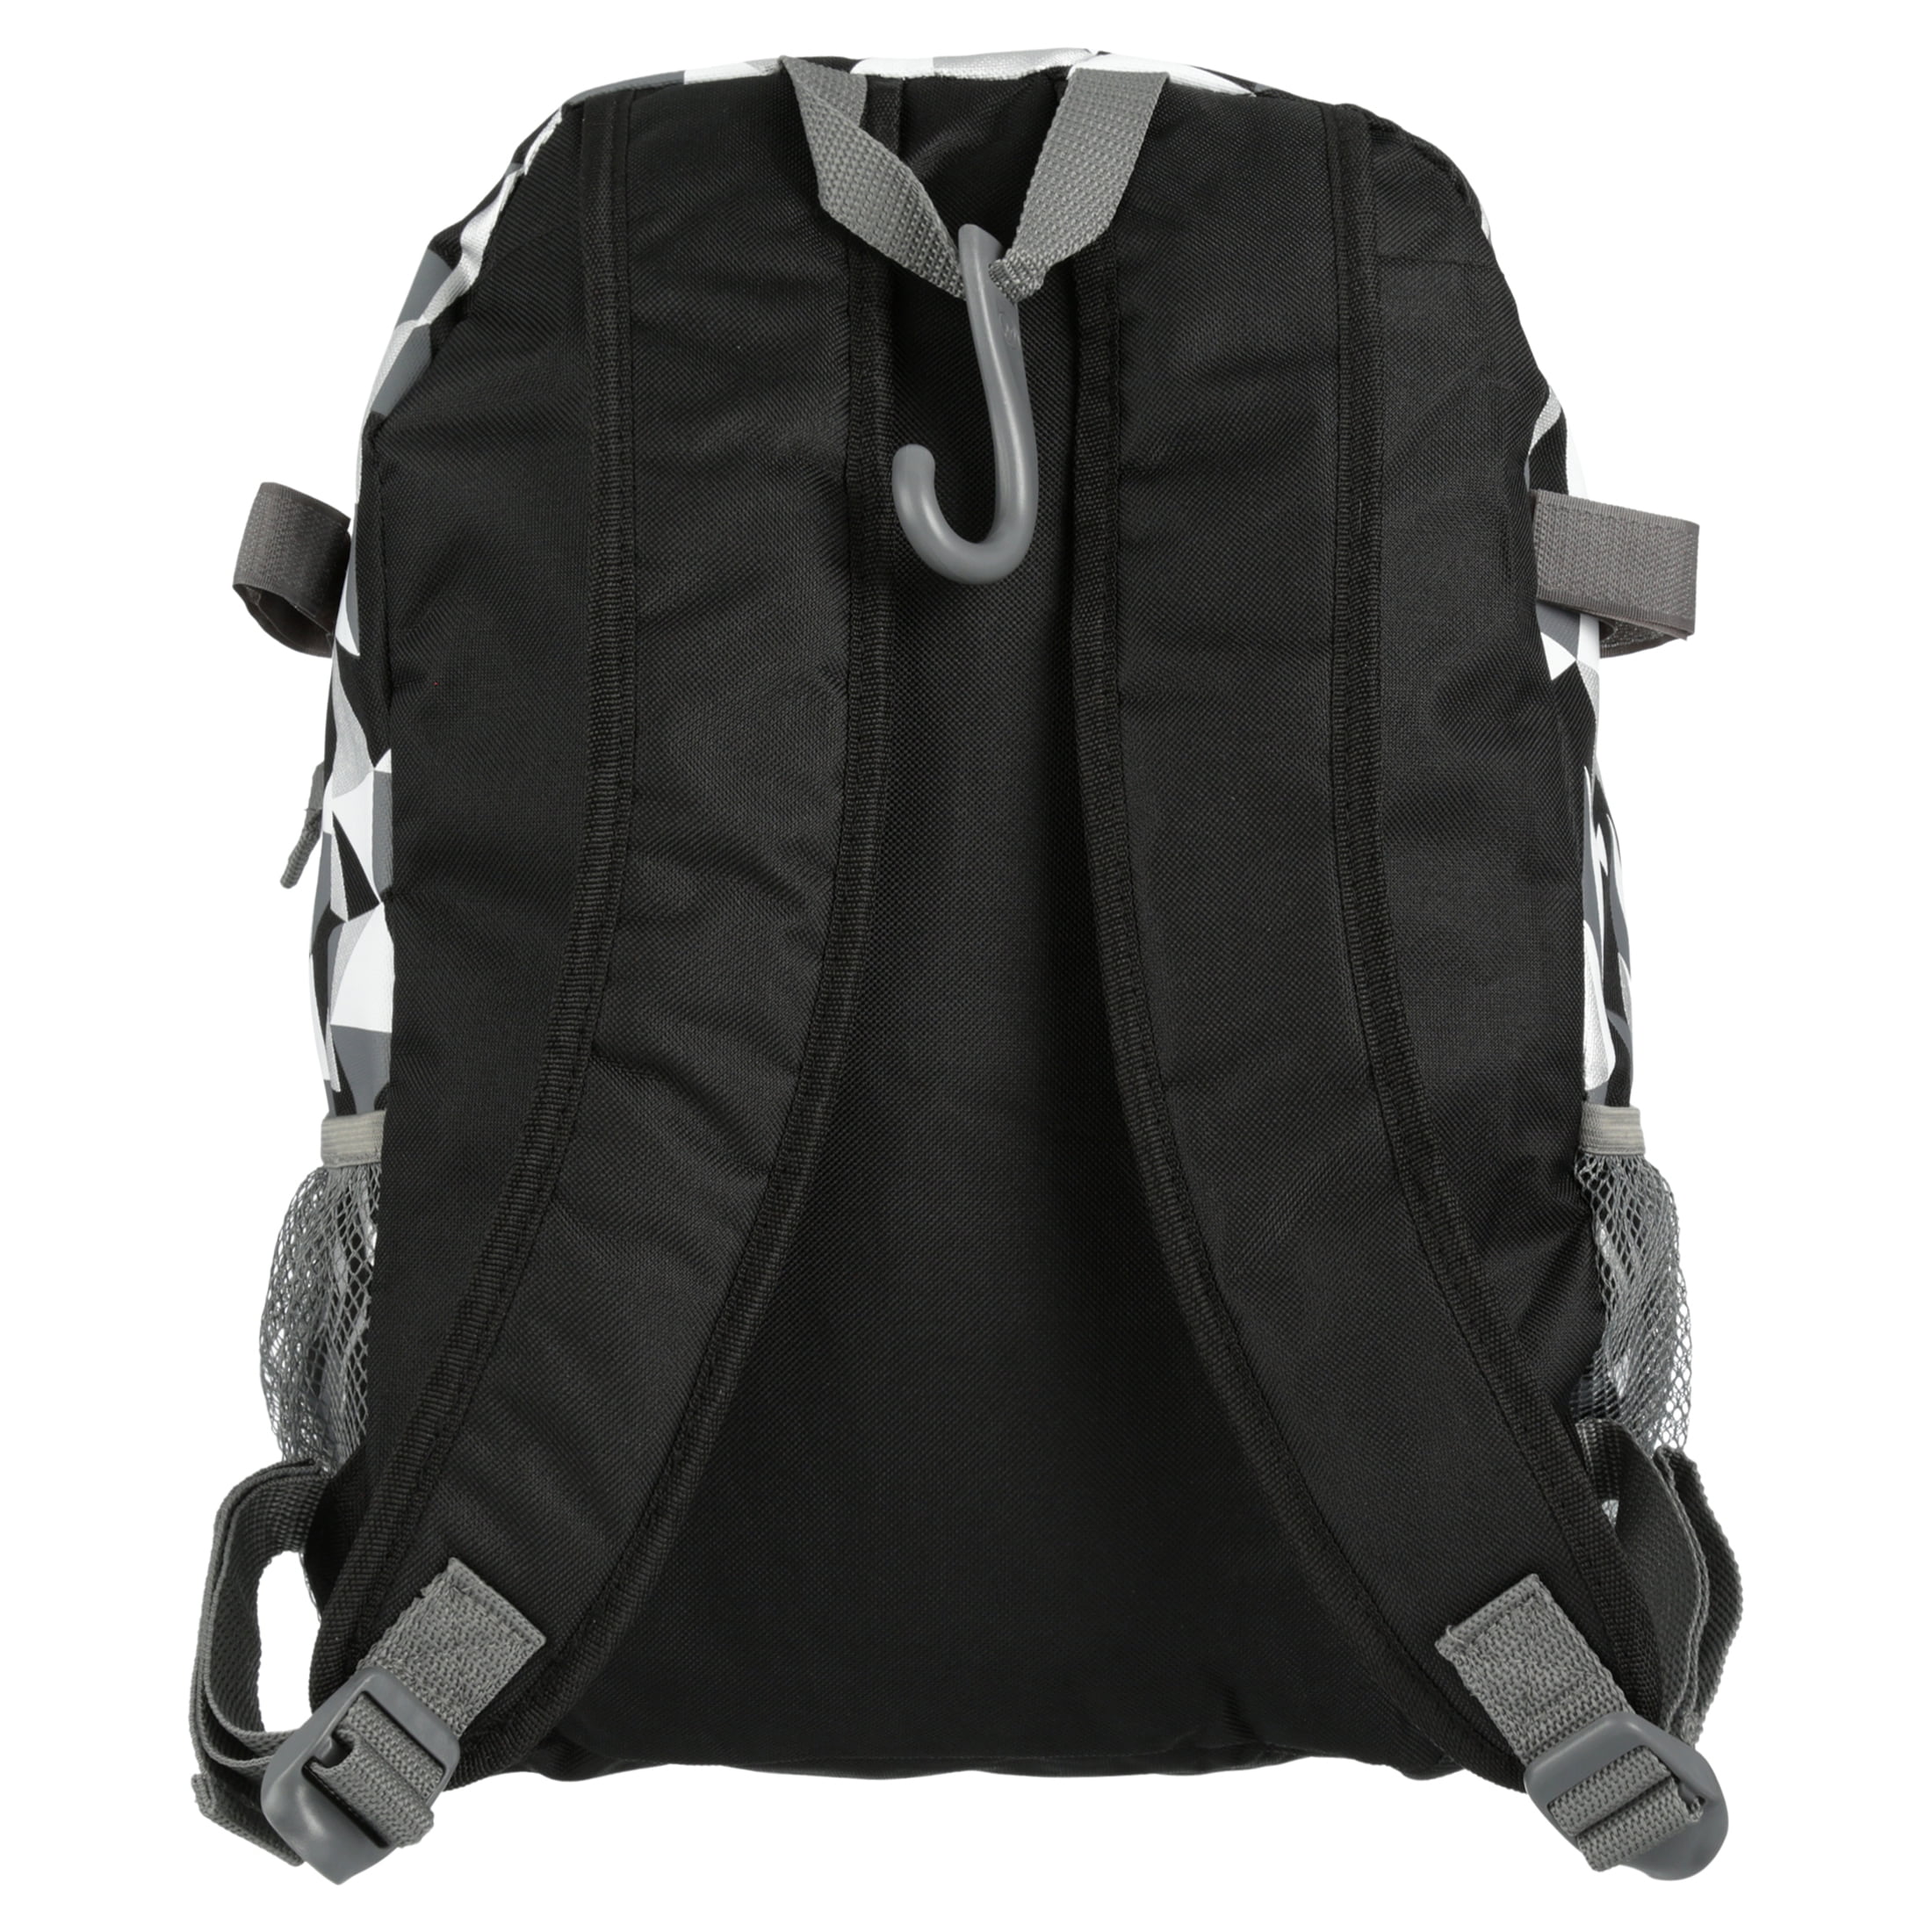 Fly Racing - Premium Gear Duffel Bag | RacingDirect.com